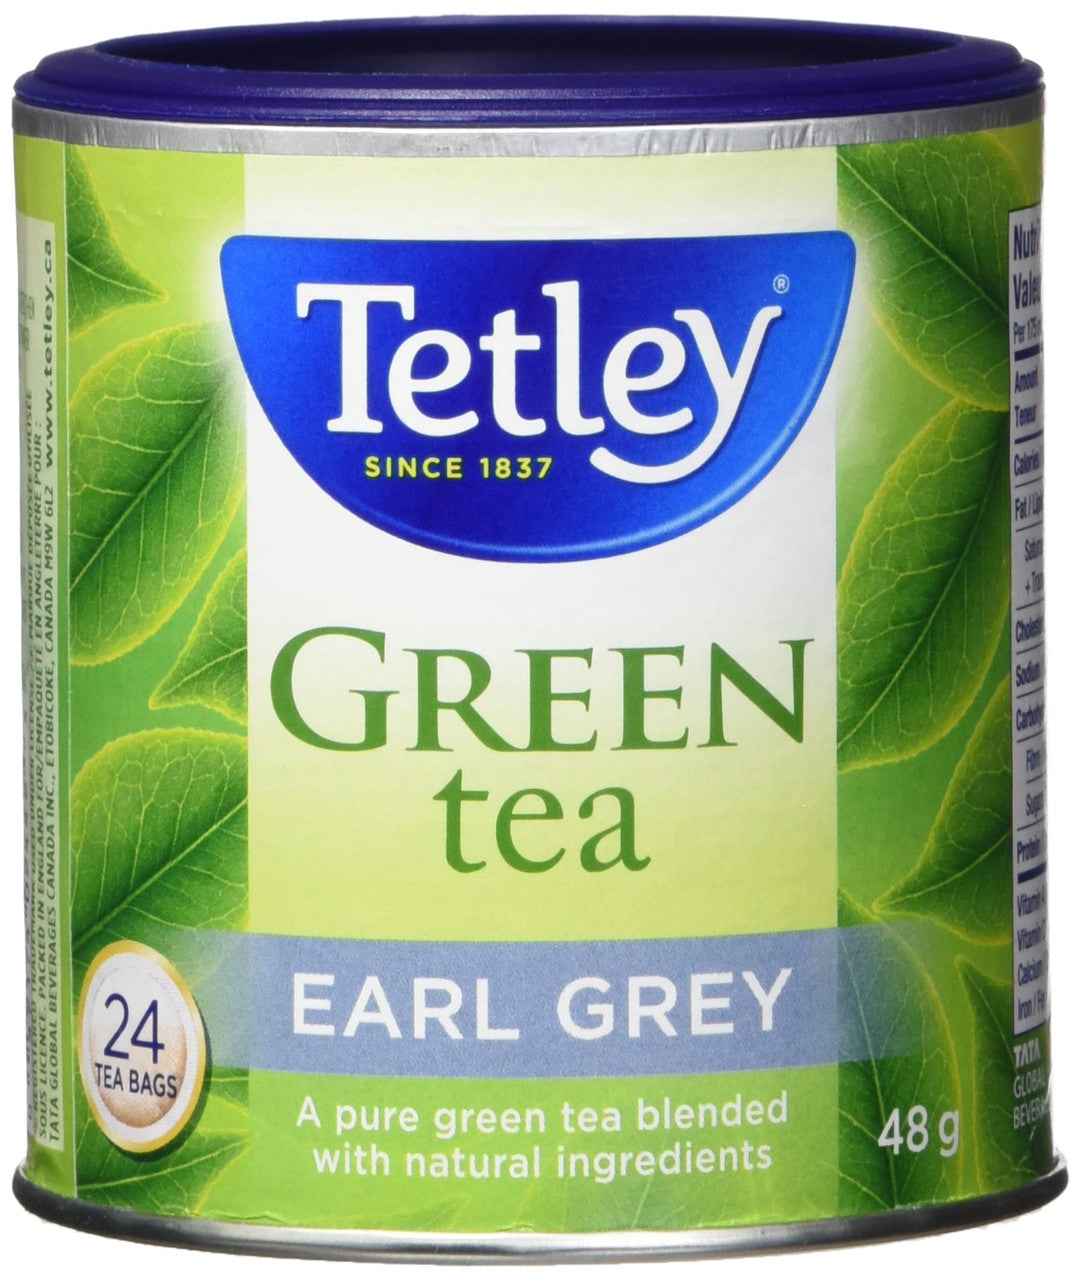 Tetley Tea Earl Grey Green Tea, 24-Count, 48g/1.7oz (Imported from Canada)